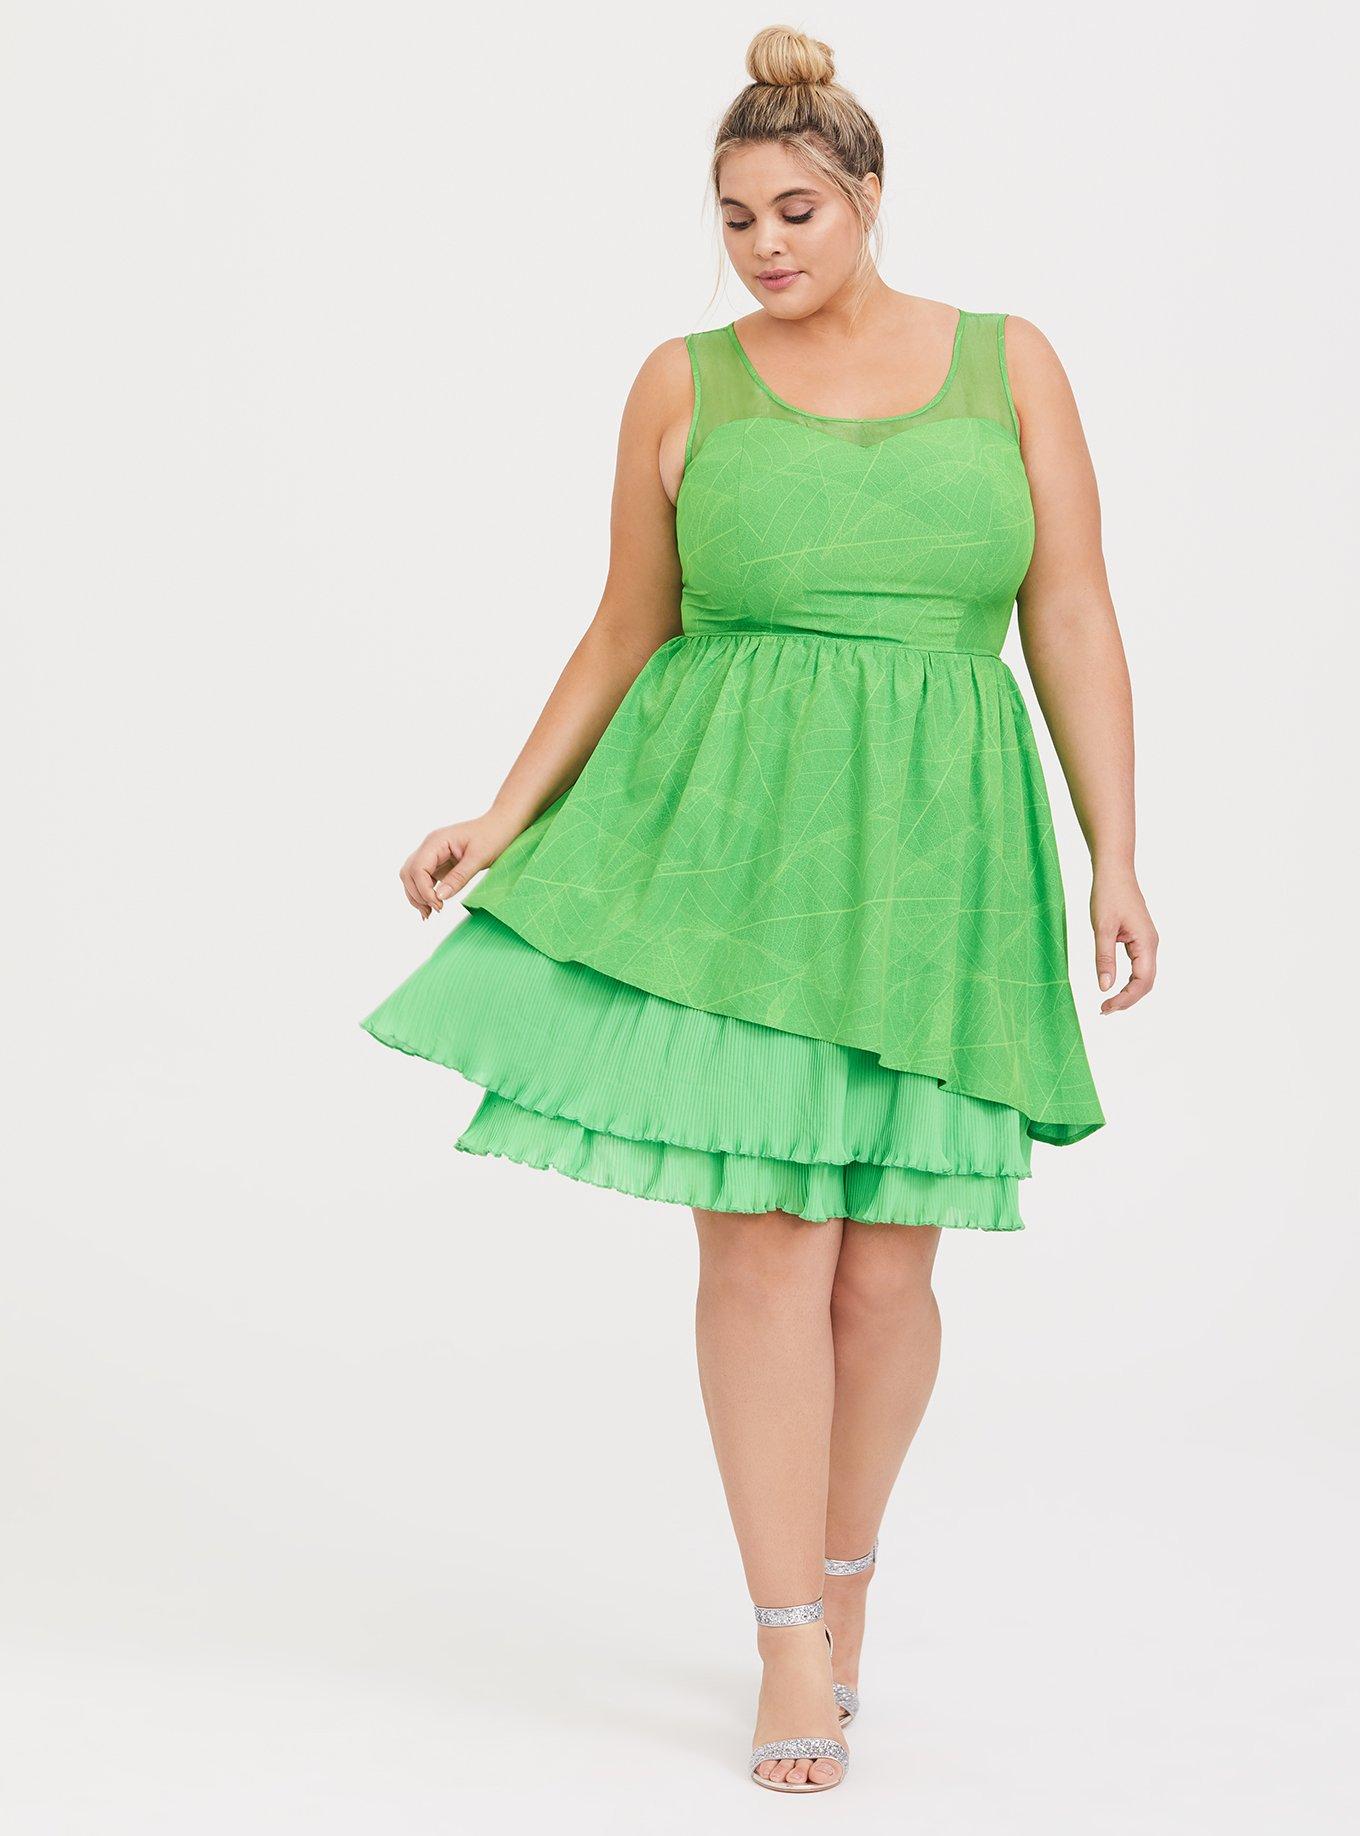 Plus Size - Disney Tinkerbell Green Dress Torrid